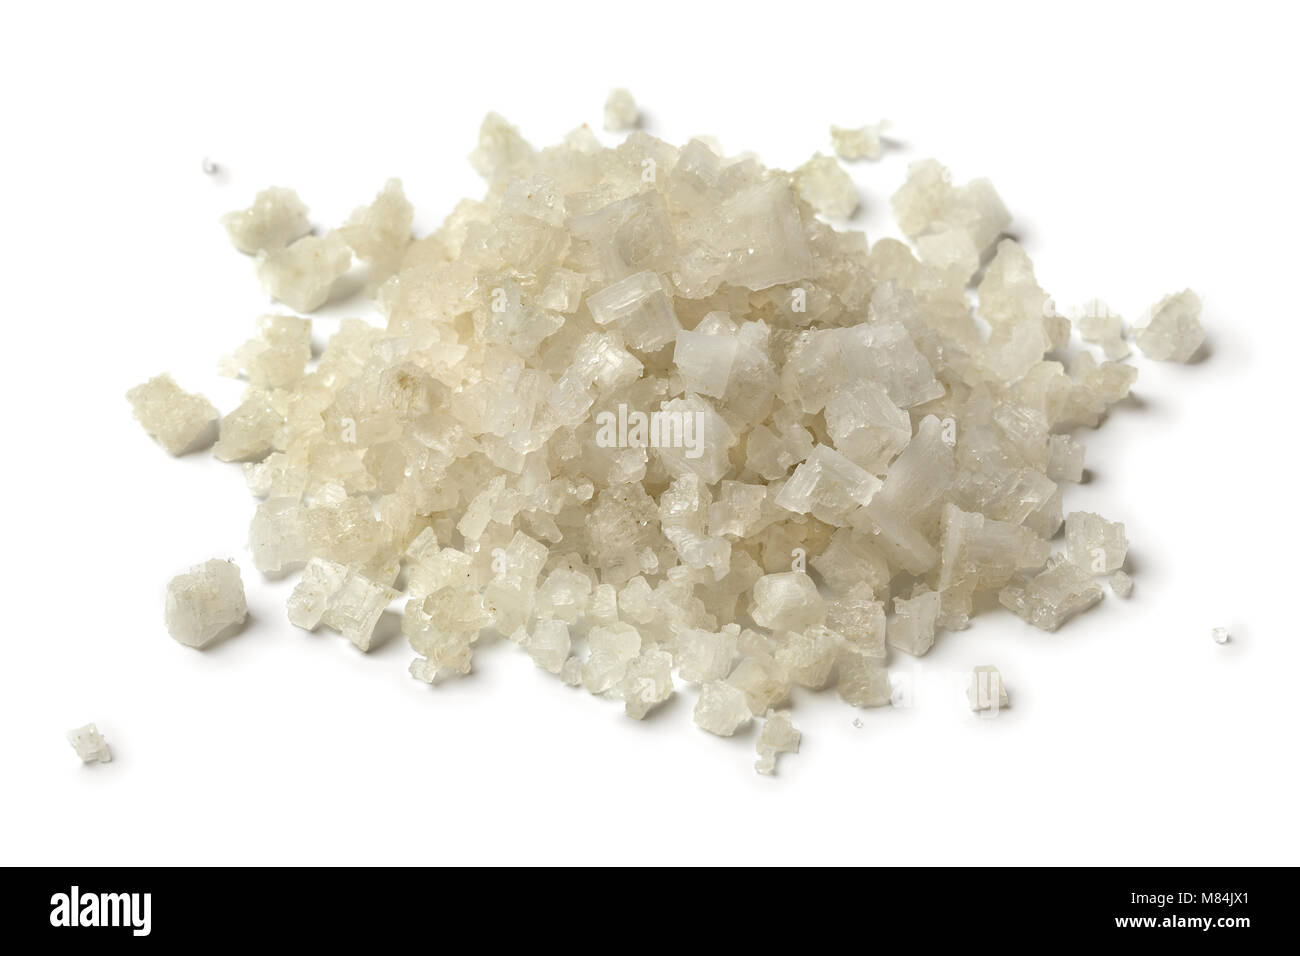 Heap of coarse sea salt isolated on white background Stock Photo